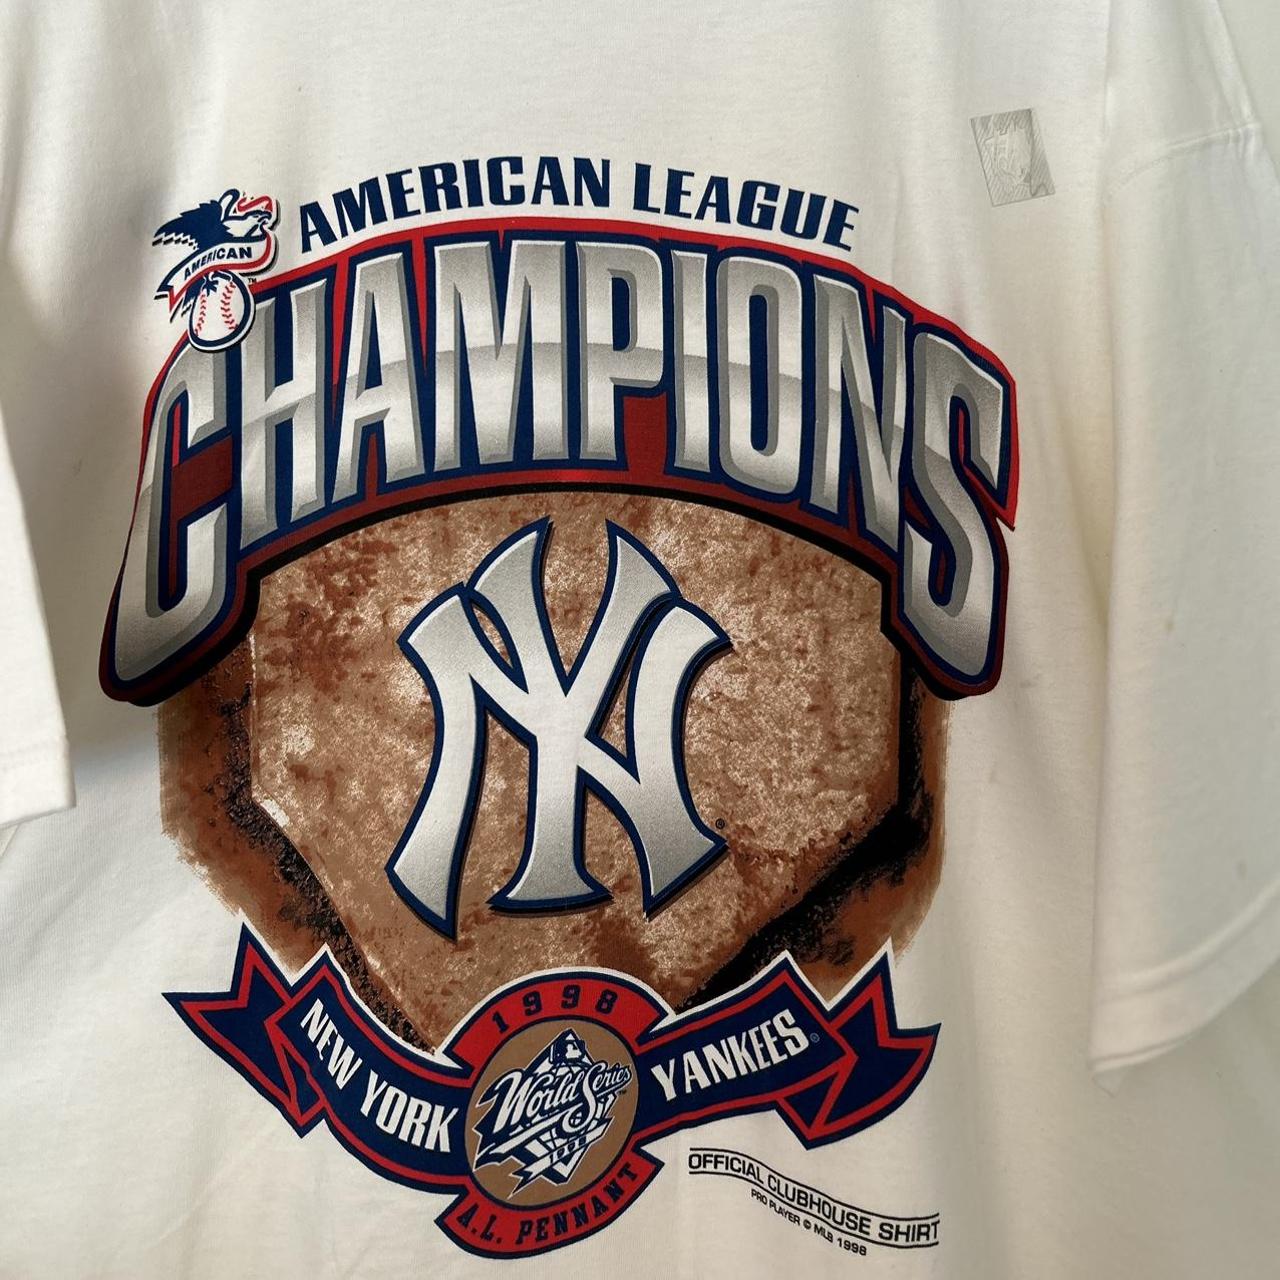 Pro Player, Shirts & Tops, Yankees 998 World Series Tshirt